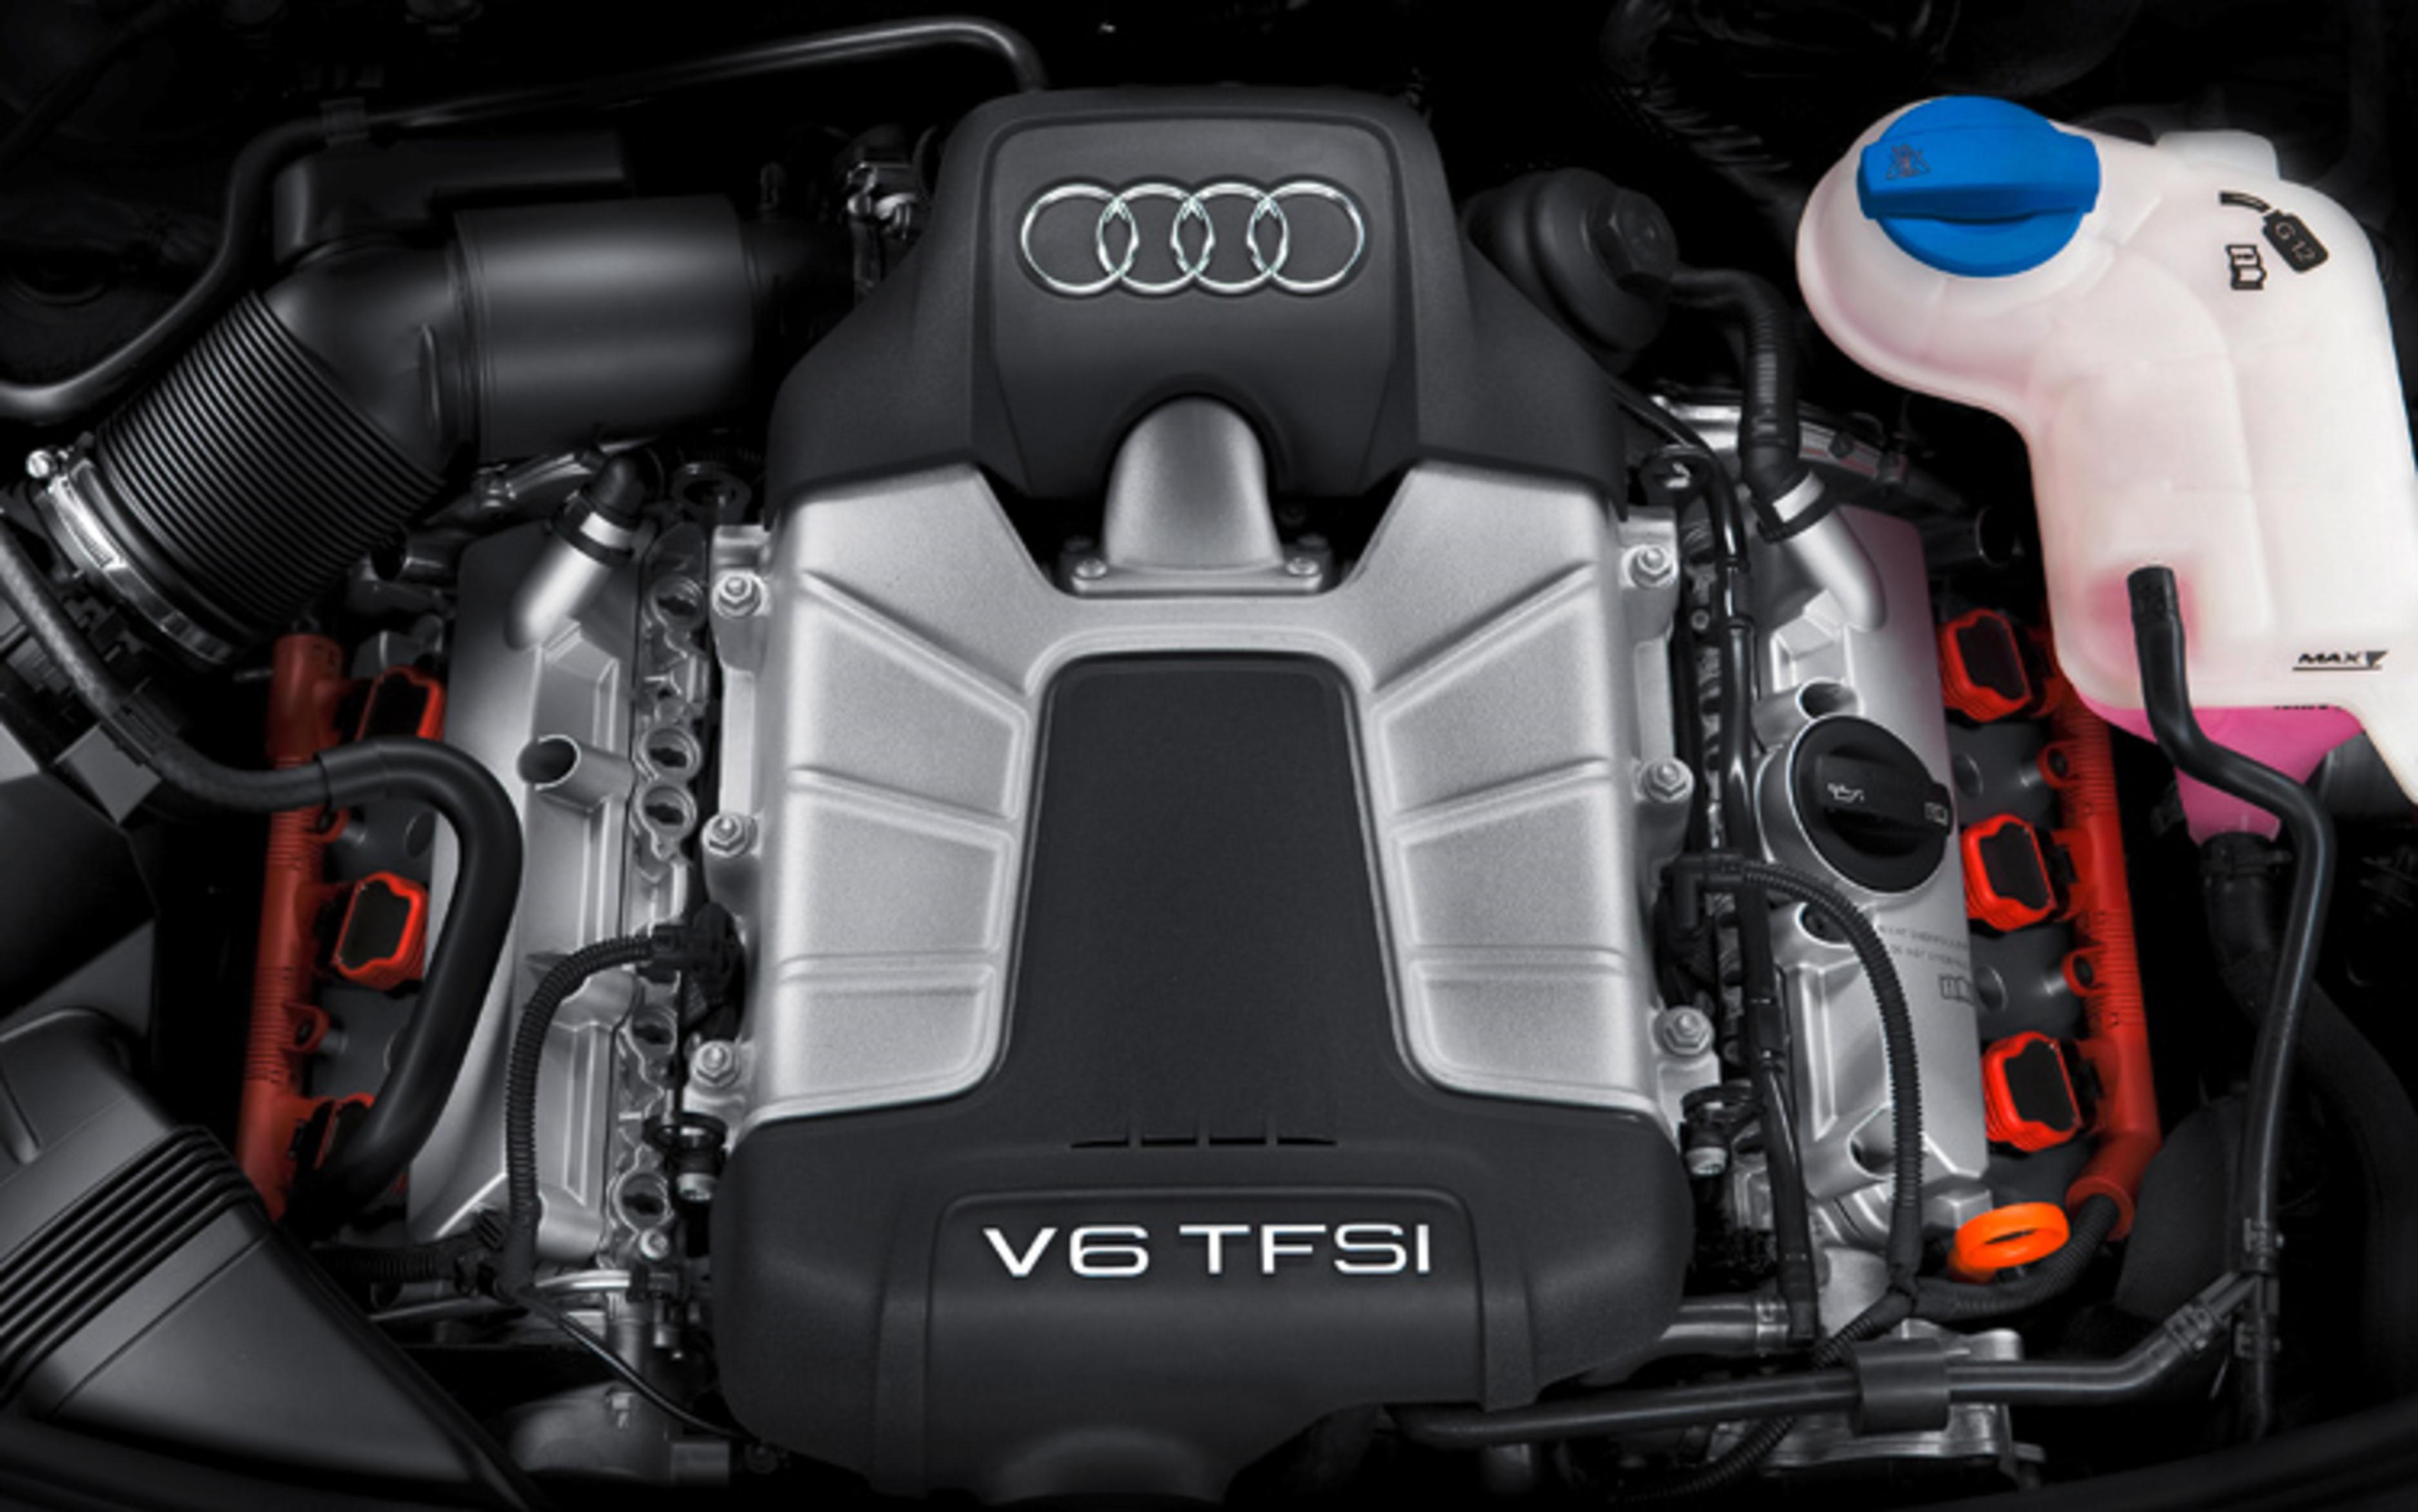 Audi Allroad V6 TFSI engines